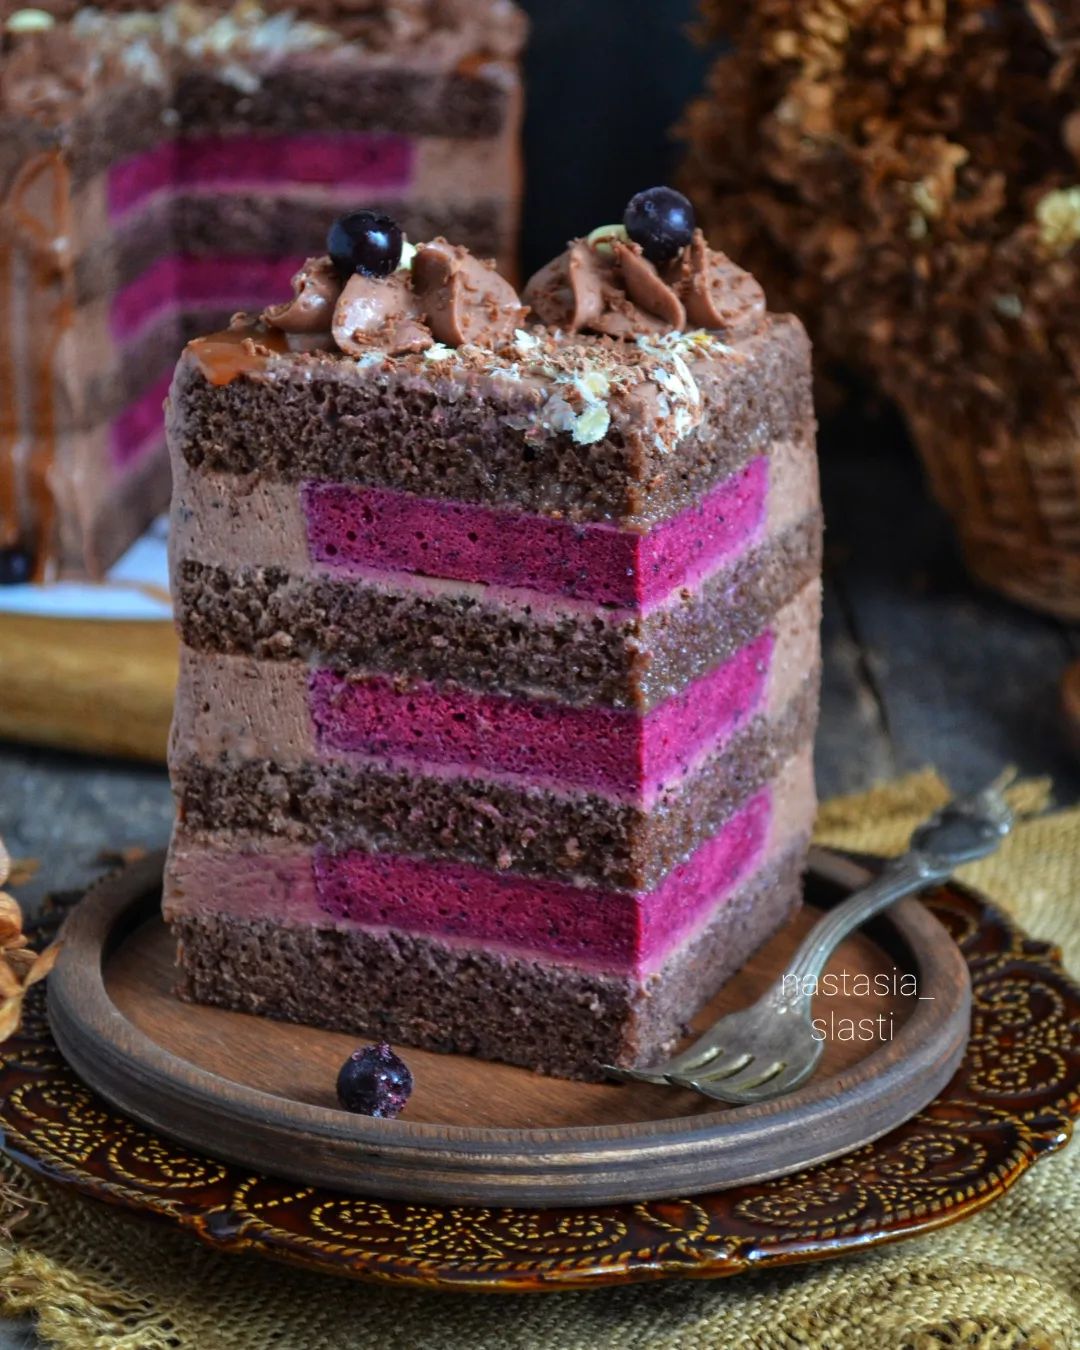 Chocolate & currant cake